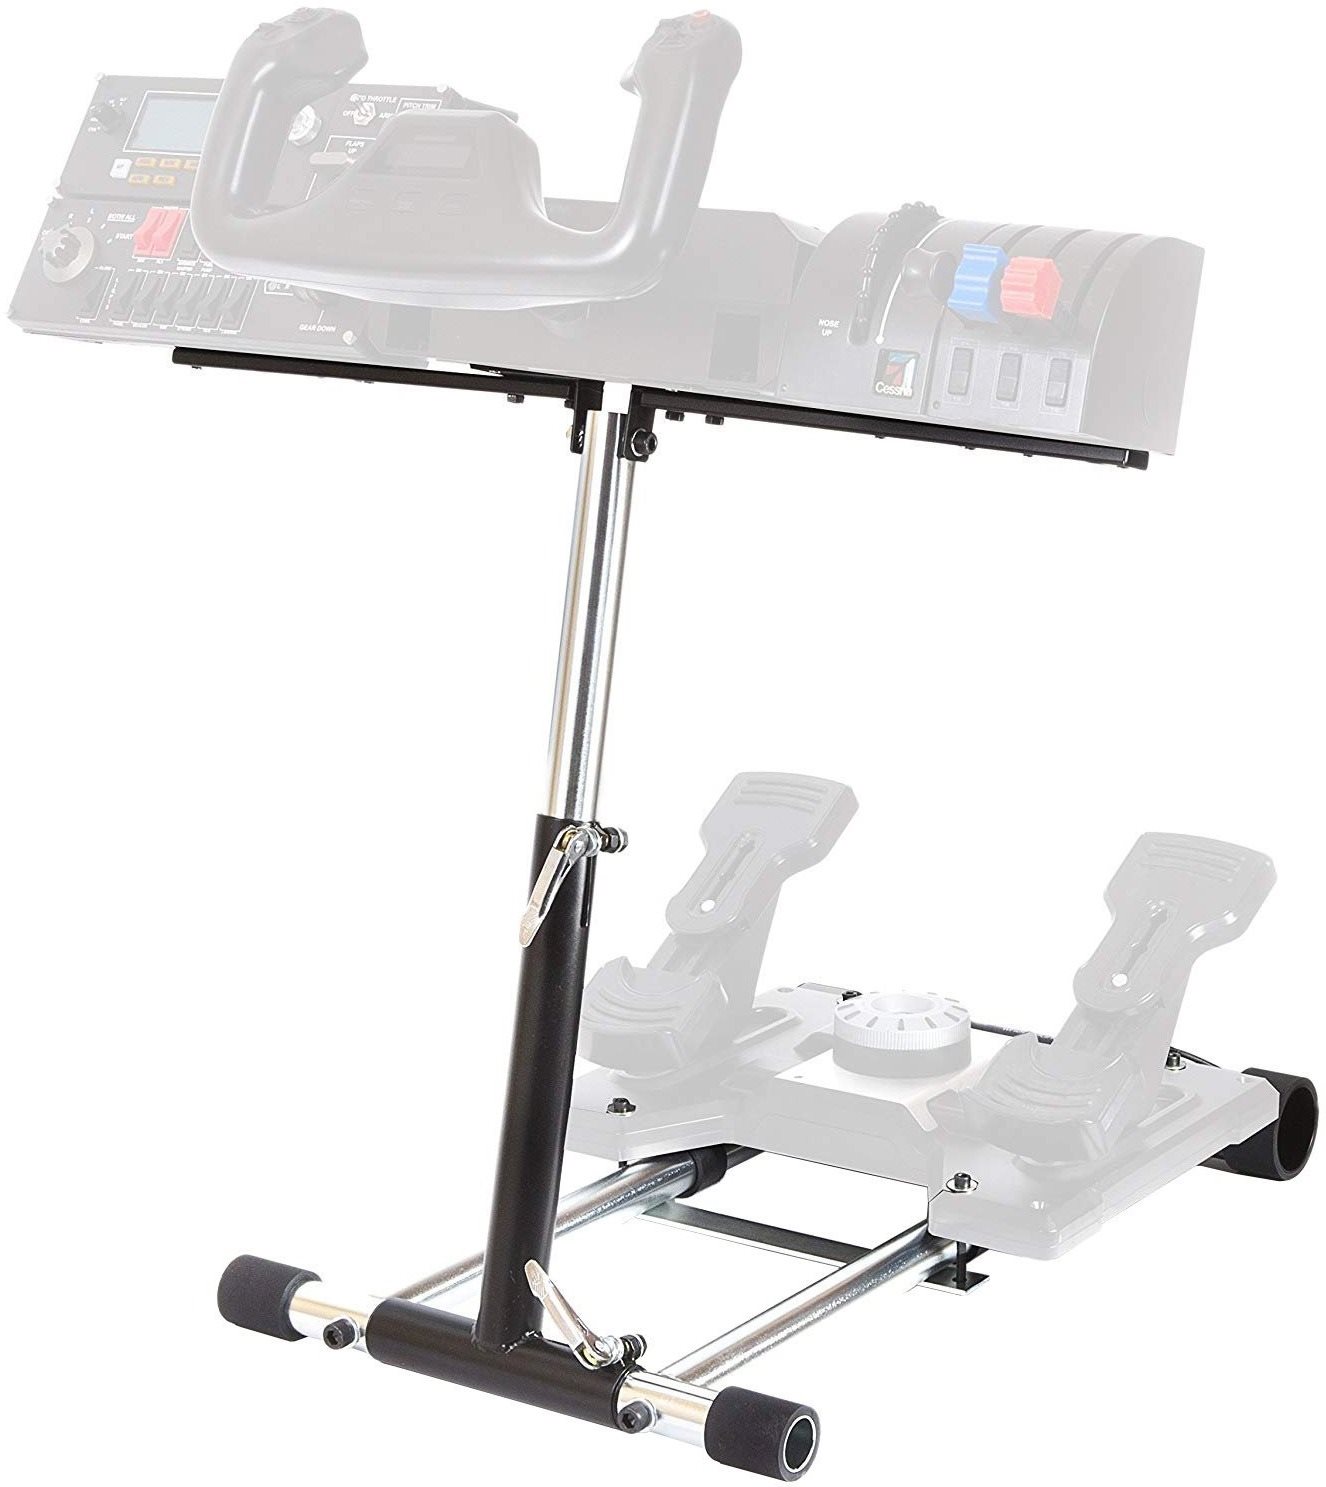 Wheel Stand Pro - Saitek Pro Flight Yoke System